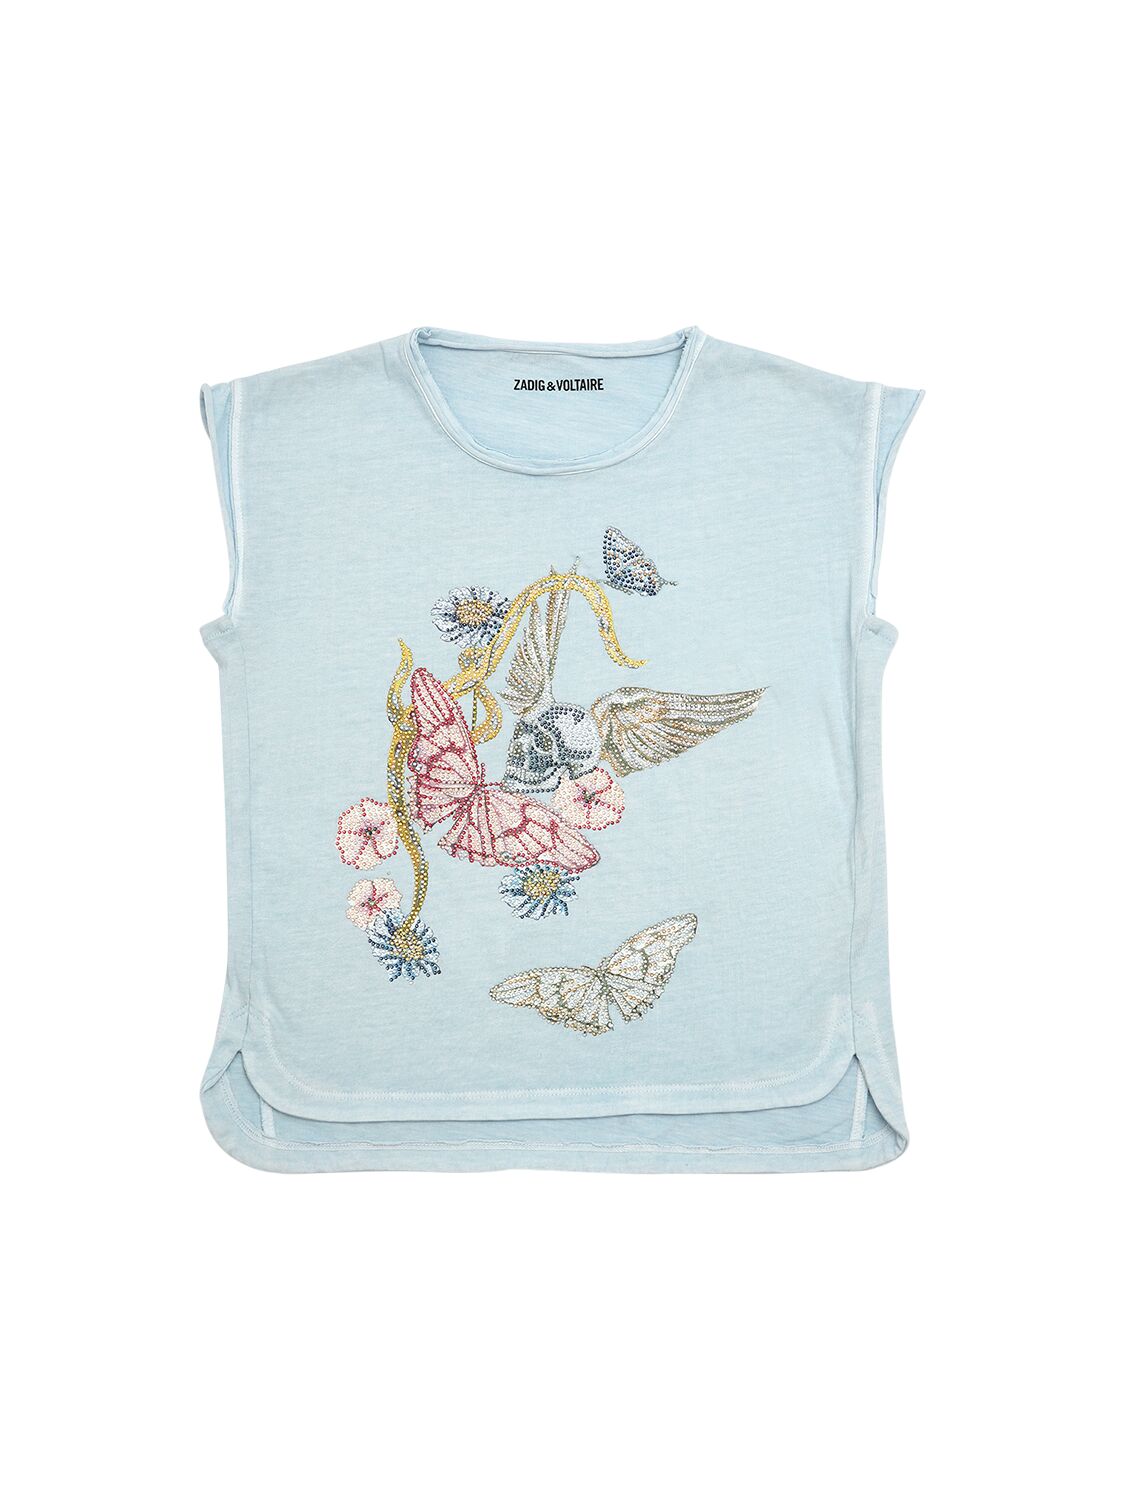 Zadig & Voltaire Kids' Embellished Garment Dyed Cotton T-shirt In Light Blue